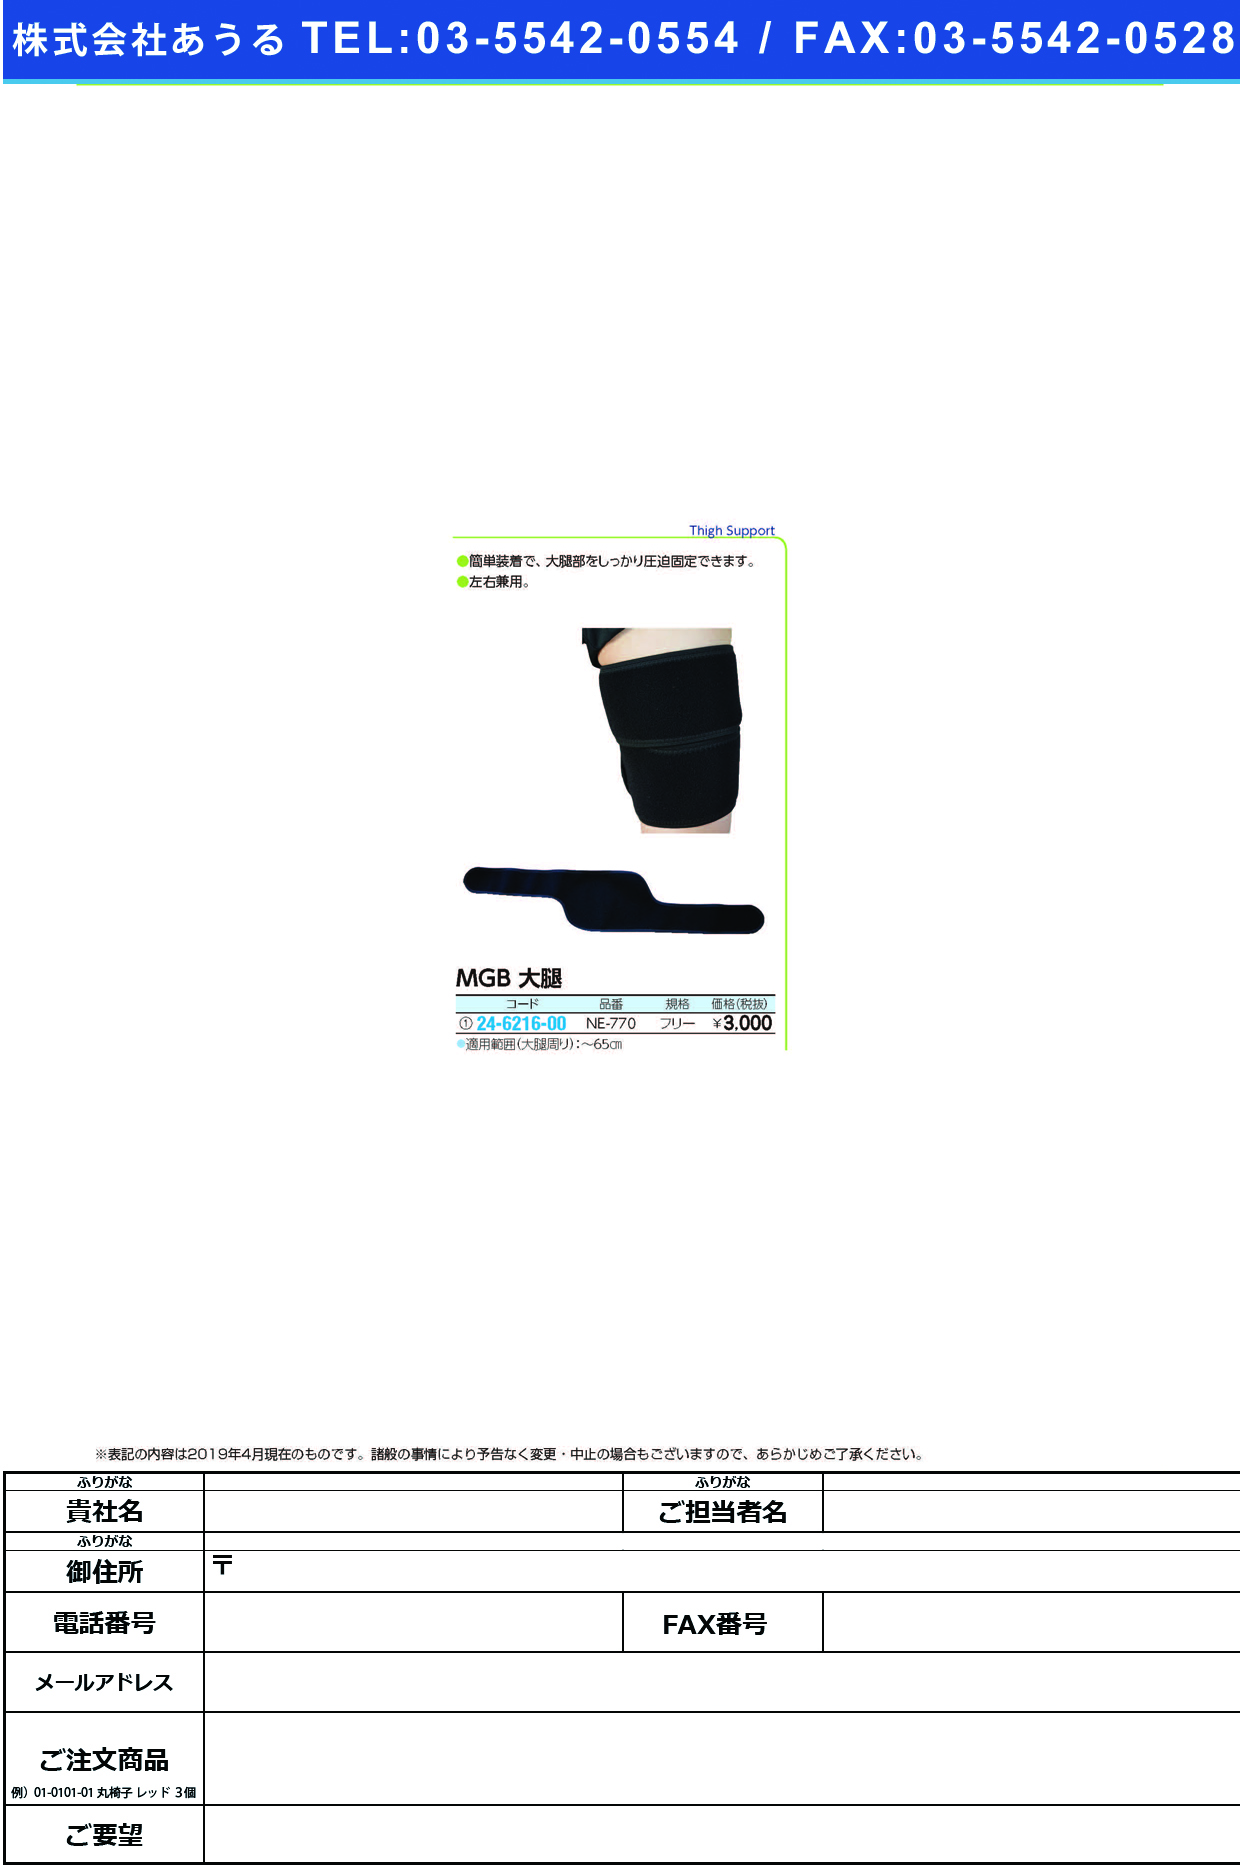 (24-6216-00)ＭＧＢ大腿 NE-770 MGBﾀﾞｲﾀｲ(日本衛材)【1個単位】【2019年カタログ商品】